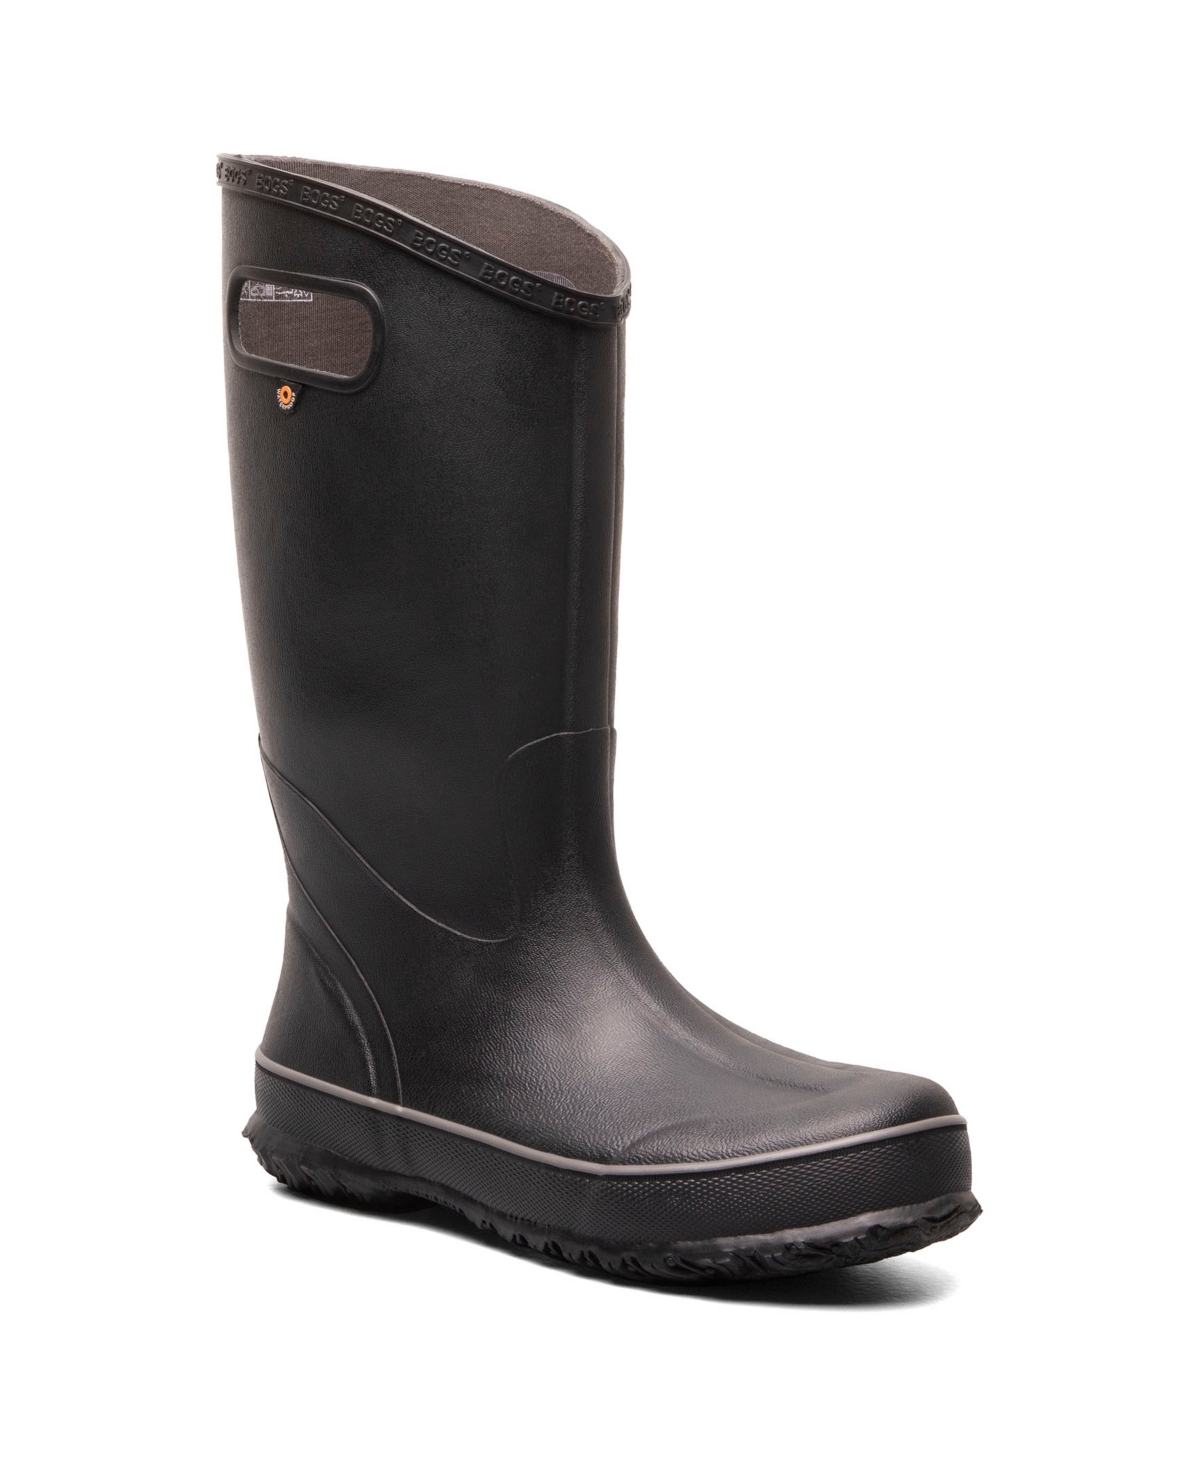 Men's Anti-Slip Rain Boot - Black